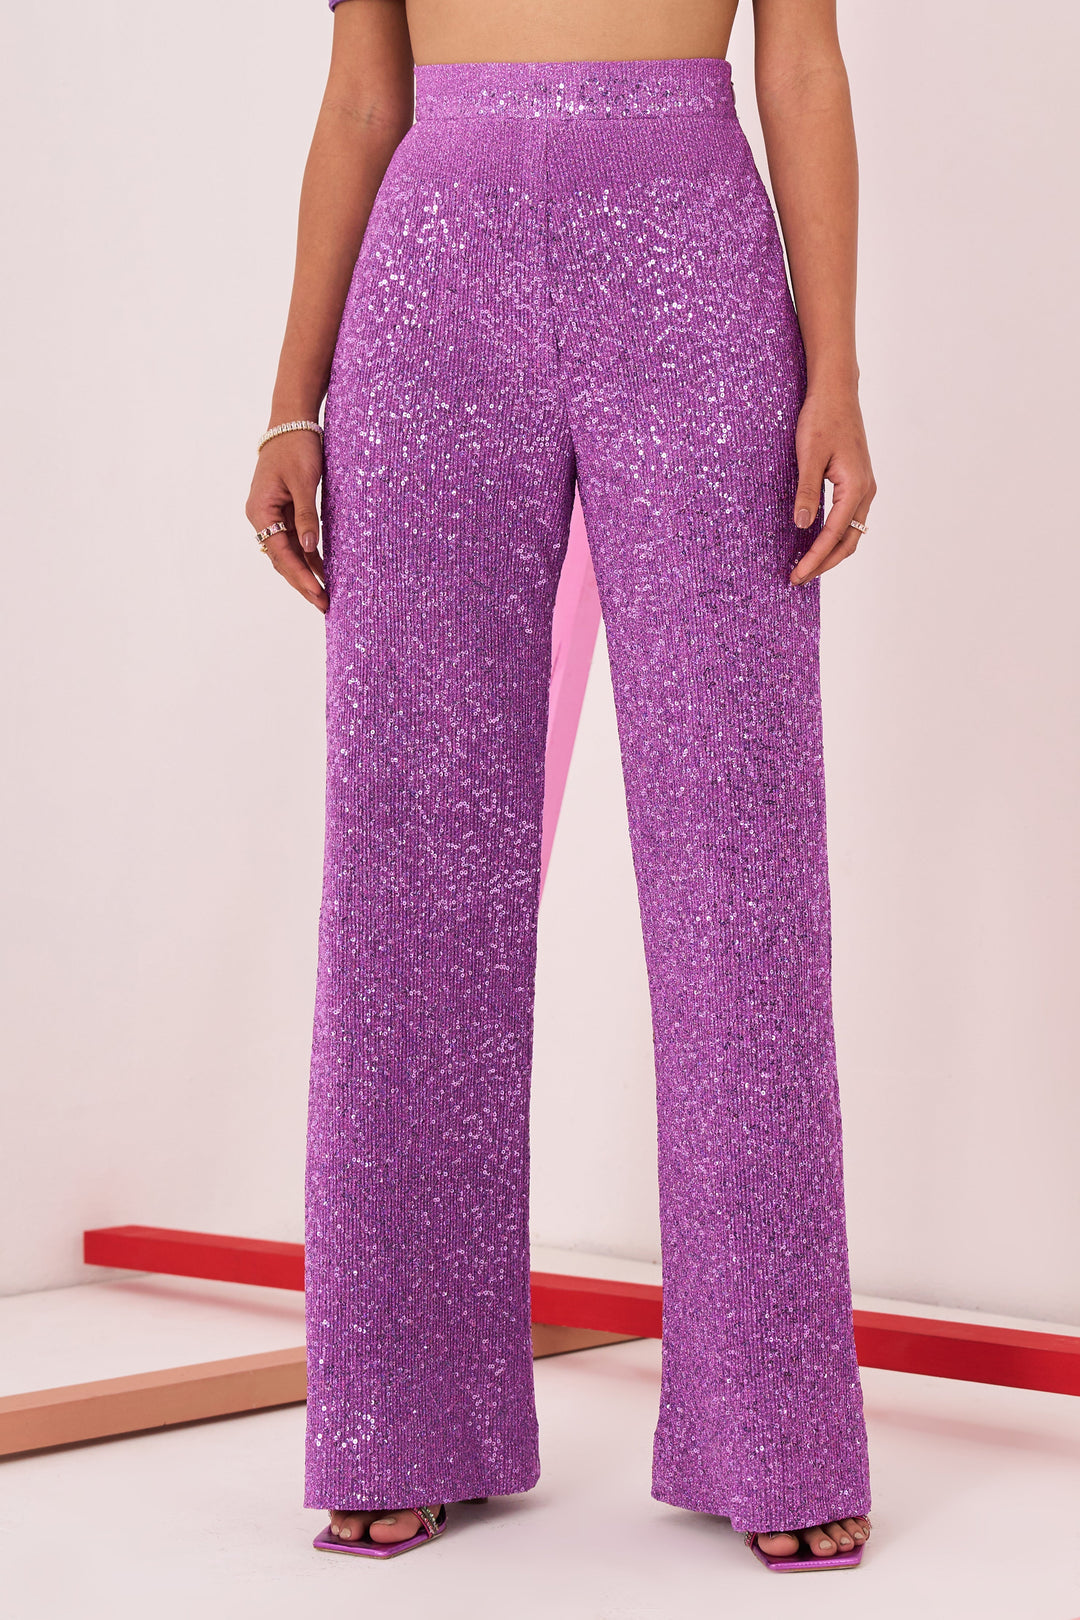 Purple shimmer pants